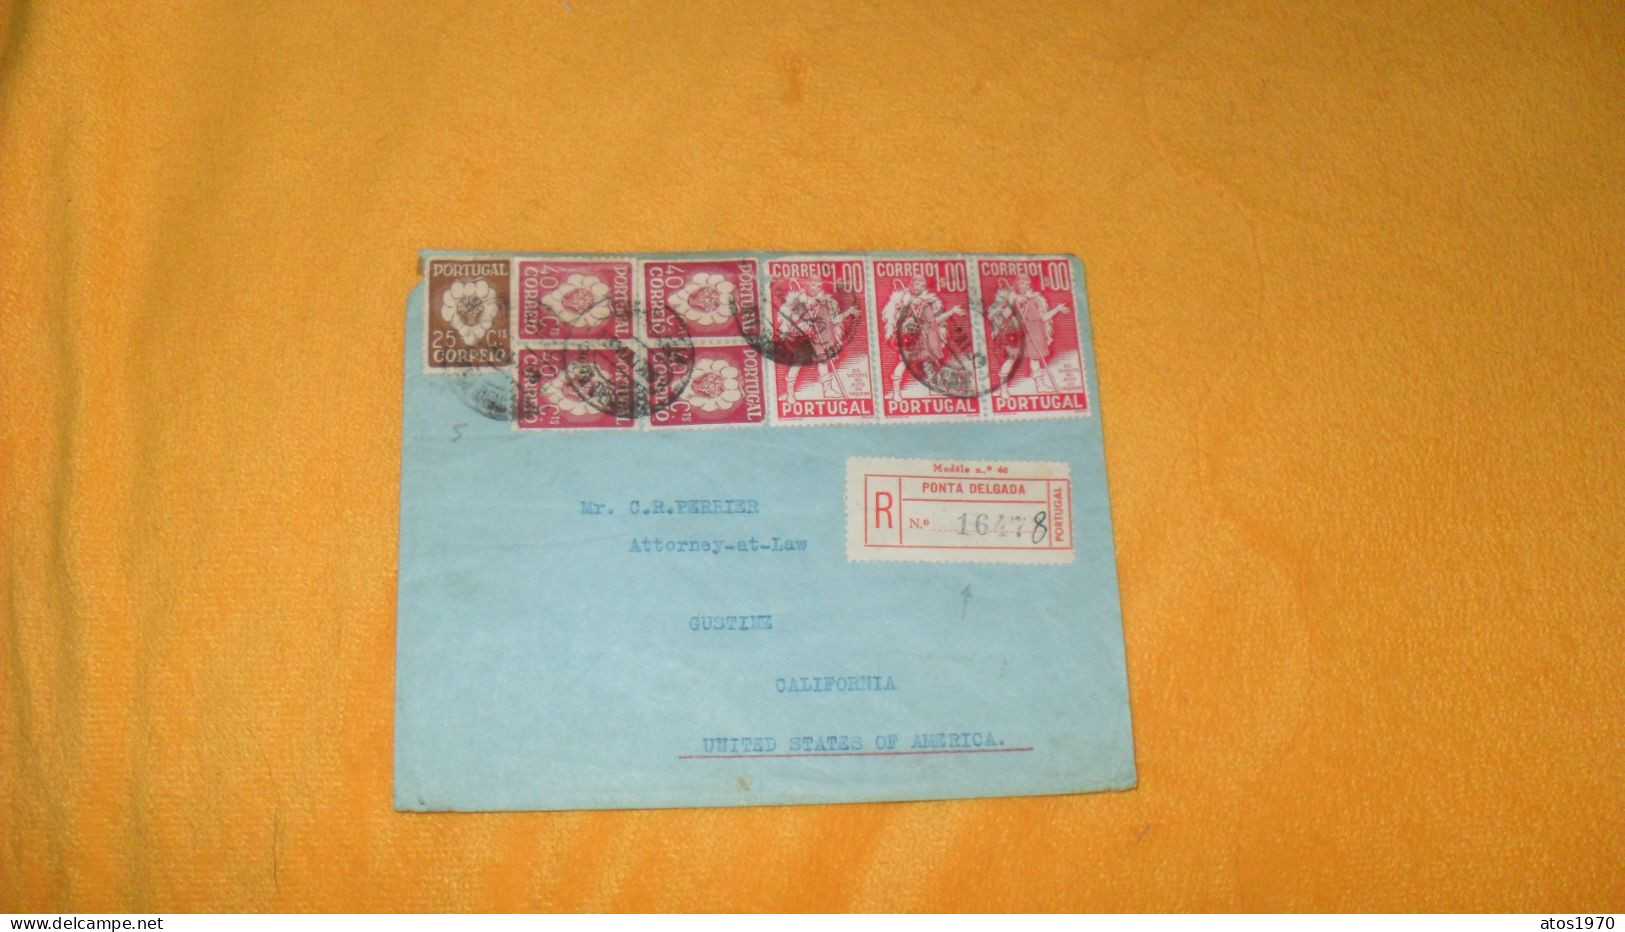 ENVELOPPE ANCIENNE DE 1939../ CACHETS PONTA DELGADA PORTUGAL POUR GUSTINE CALIFORNIE USA + TIMBRES X8 - Covers & Documents